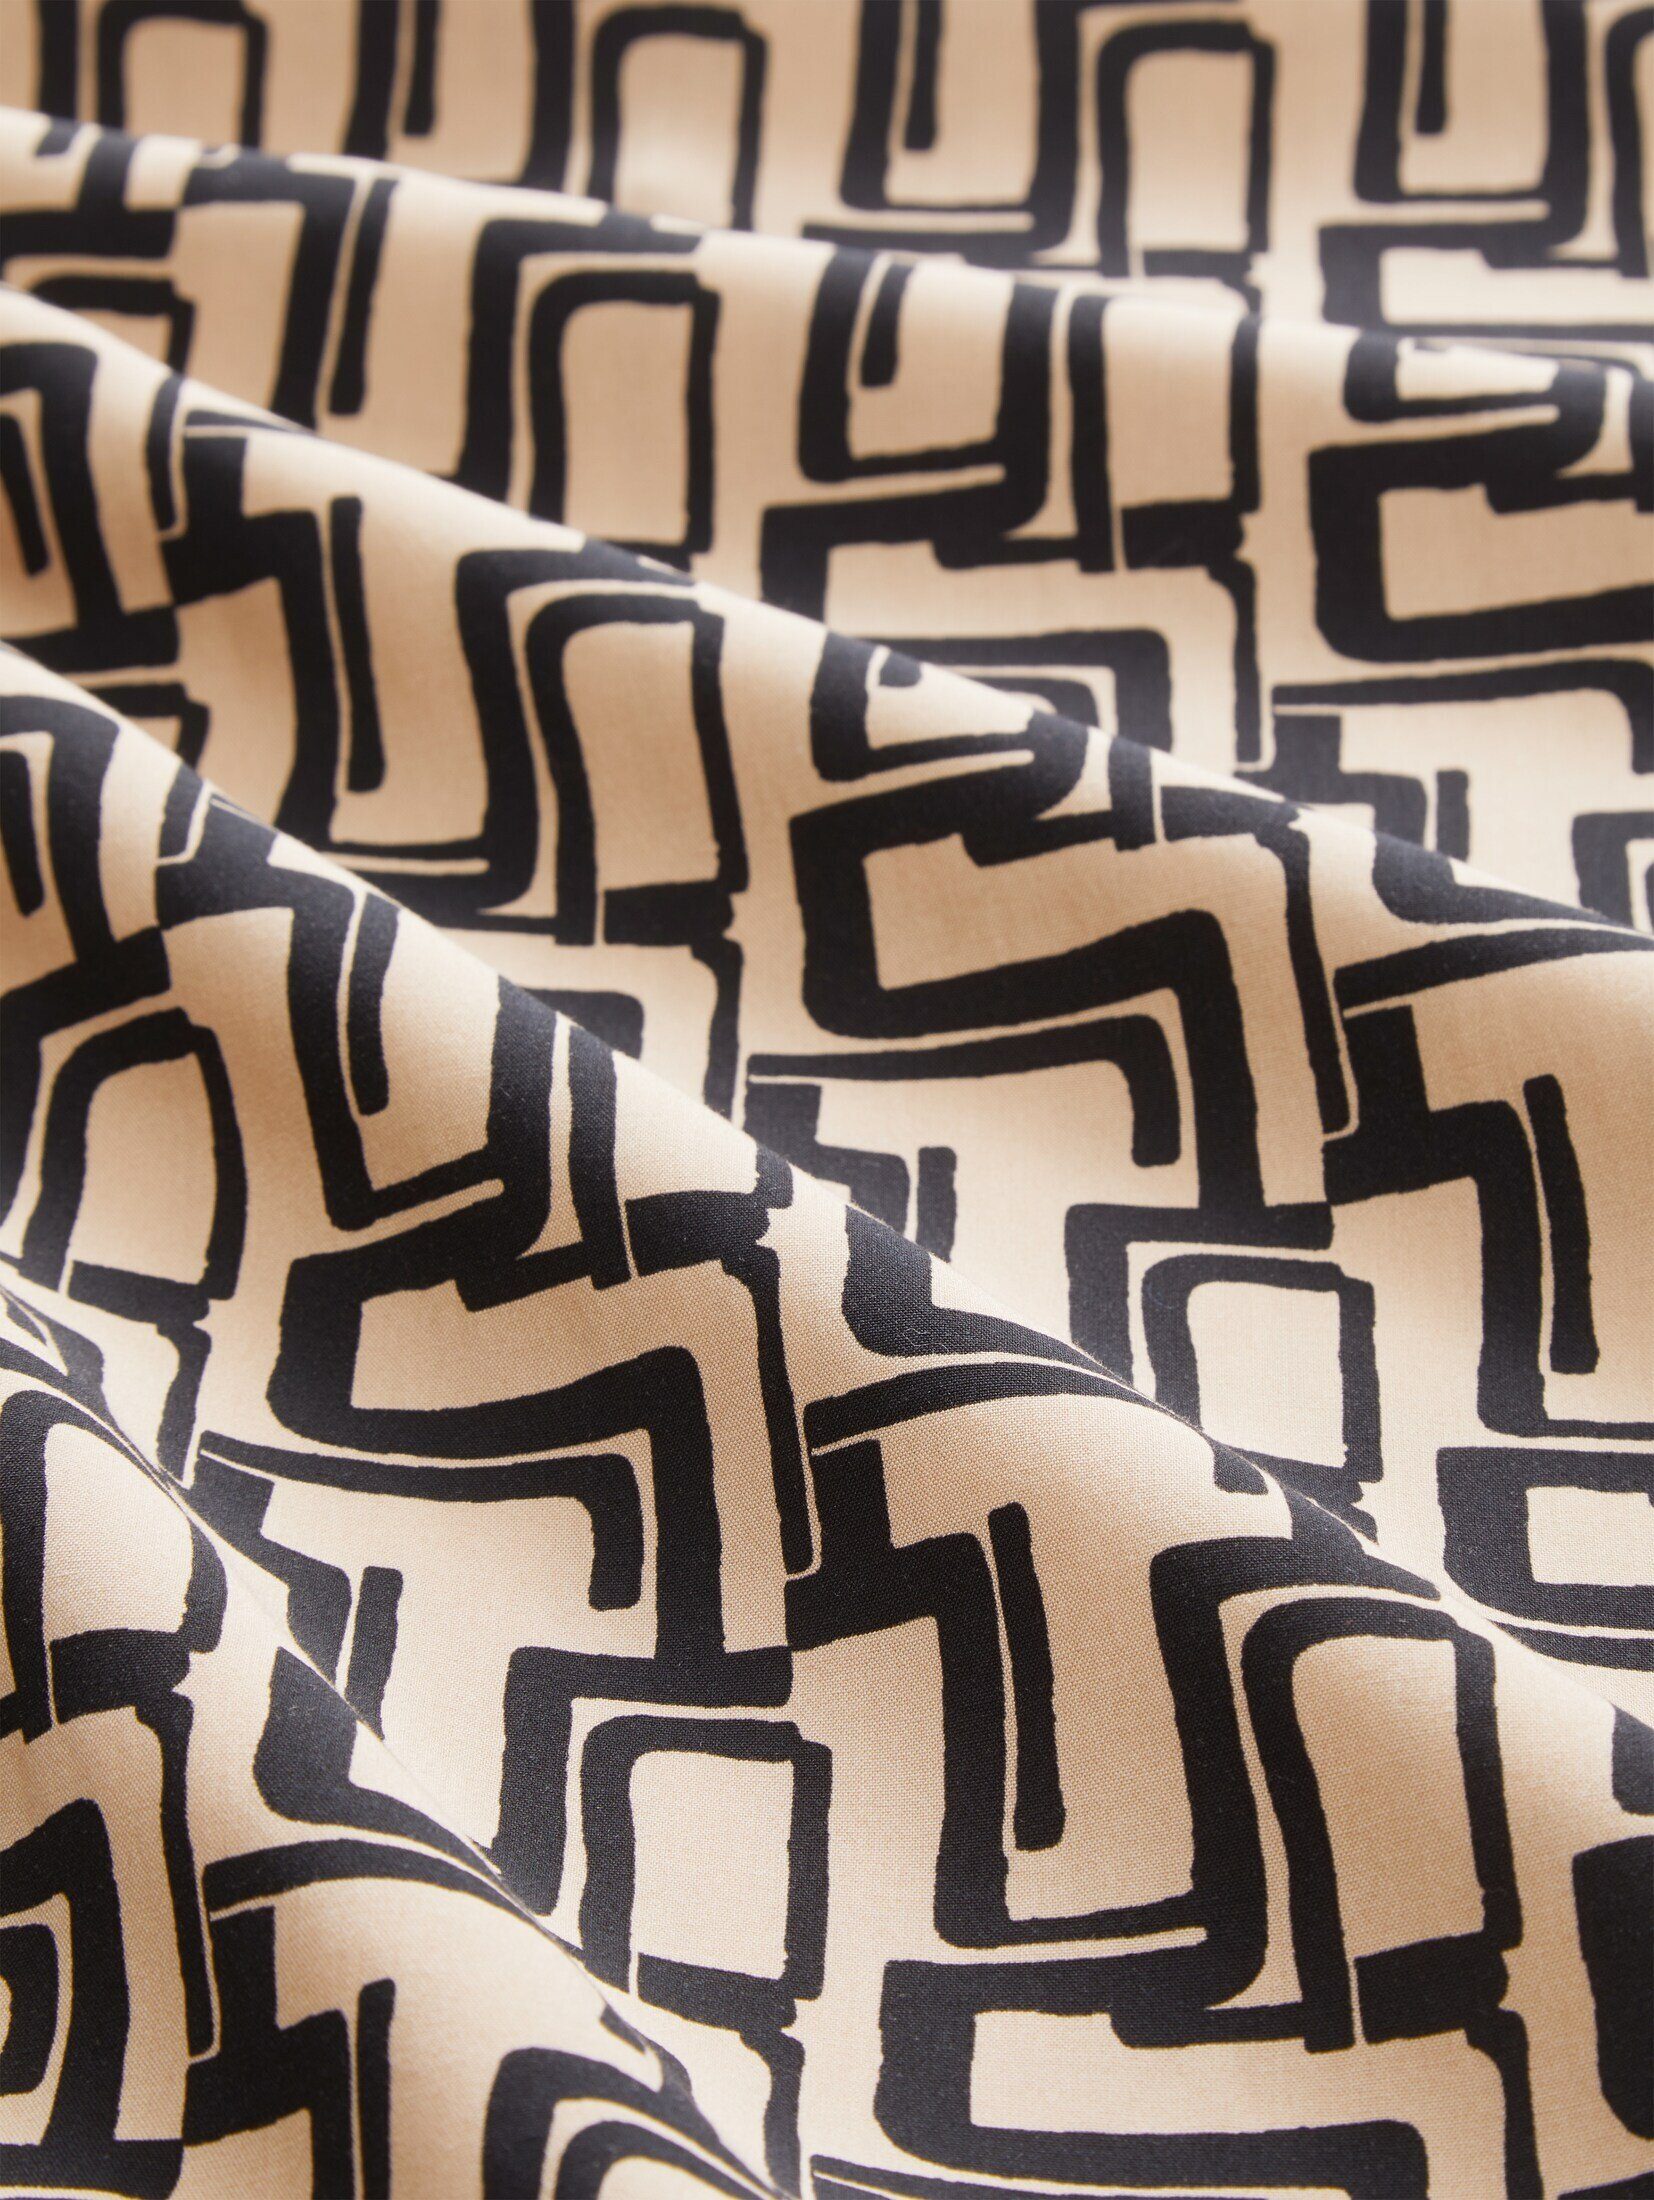 Jerseykleid Gemustertes Minikleid TAILOR beige ECOVERO(TM) black design LENZING(TM) TOM abstract mit